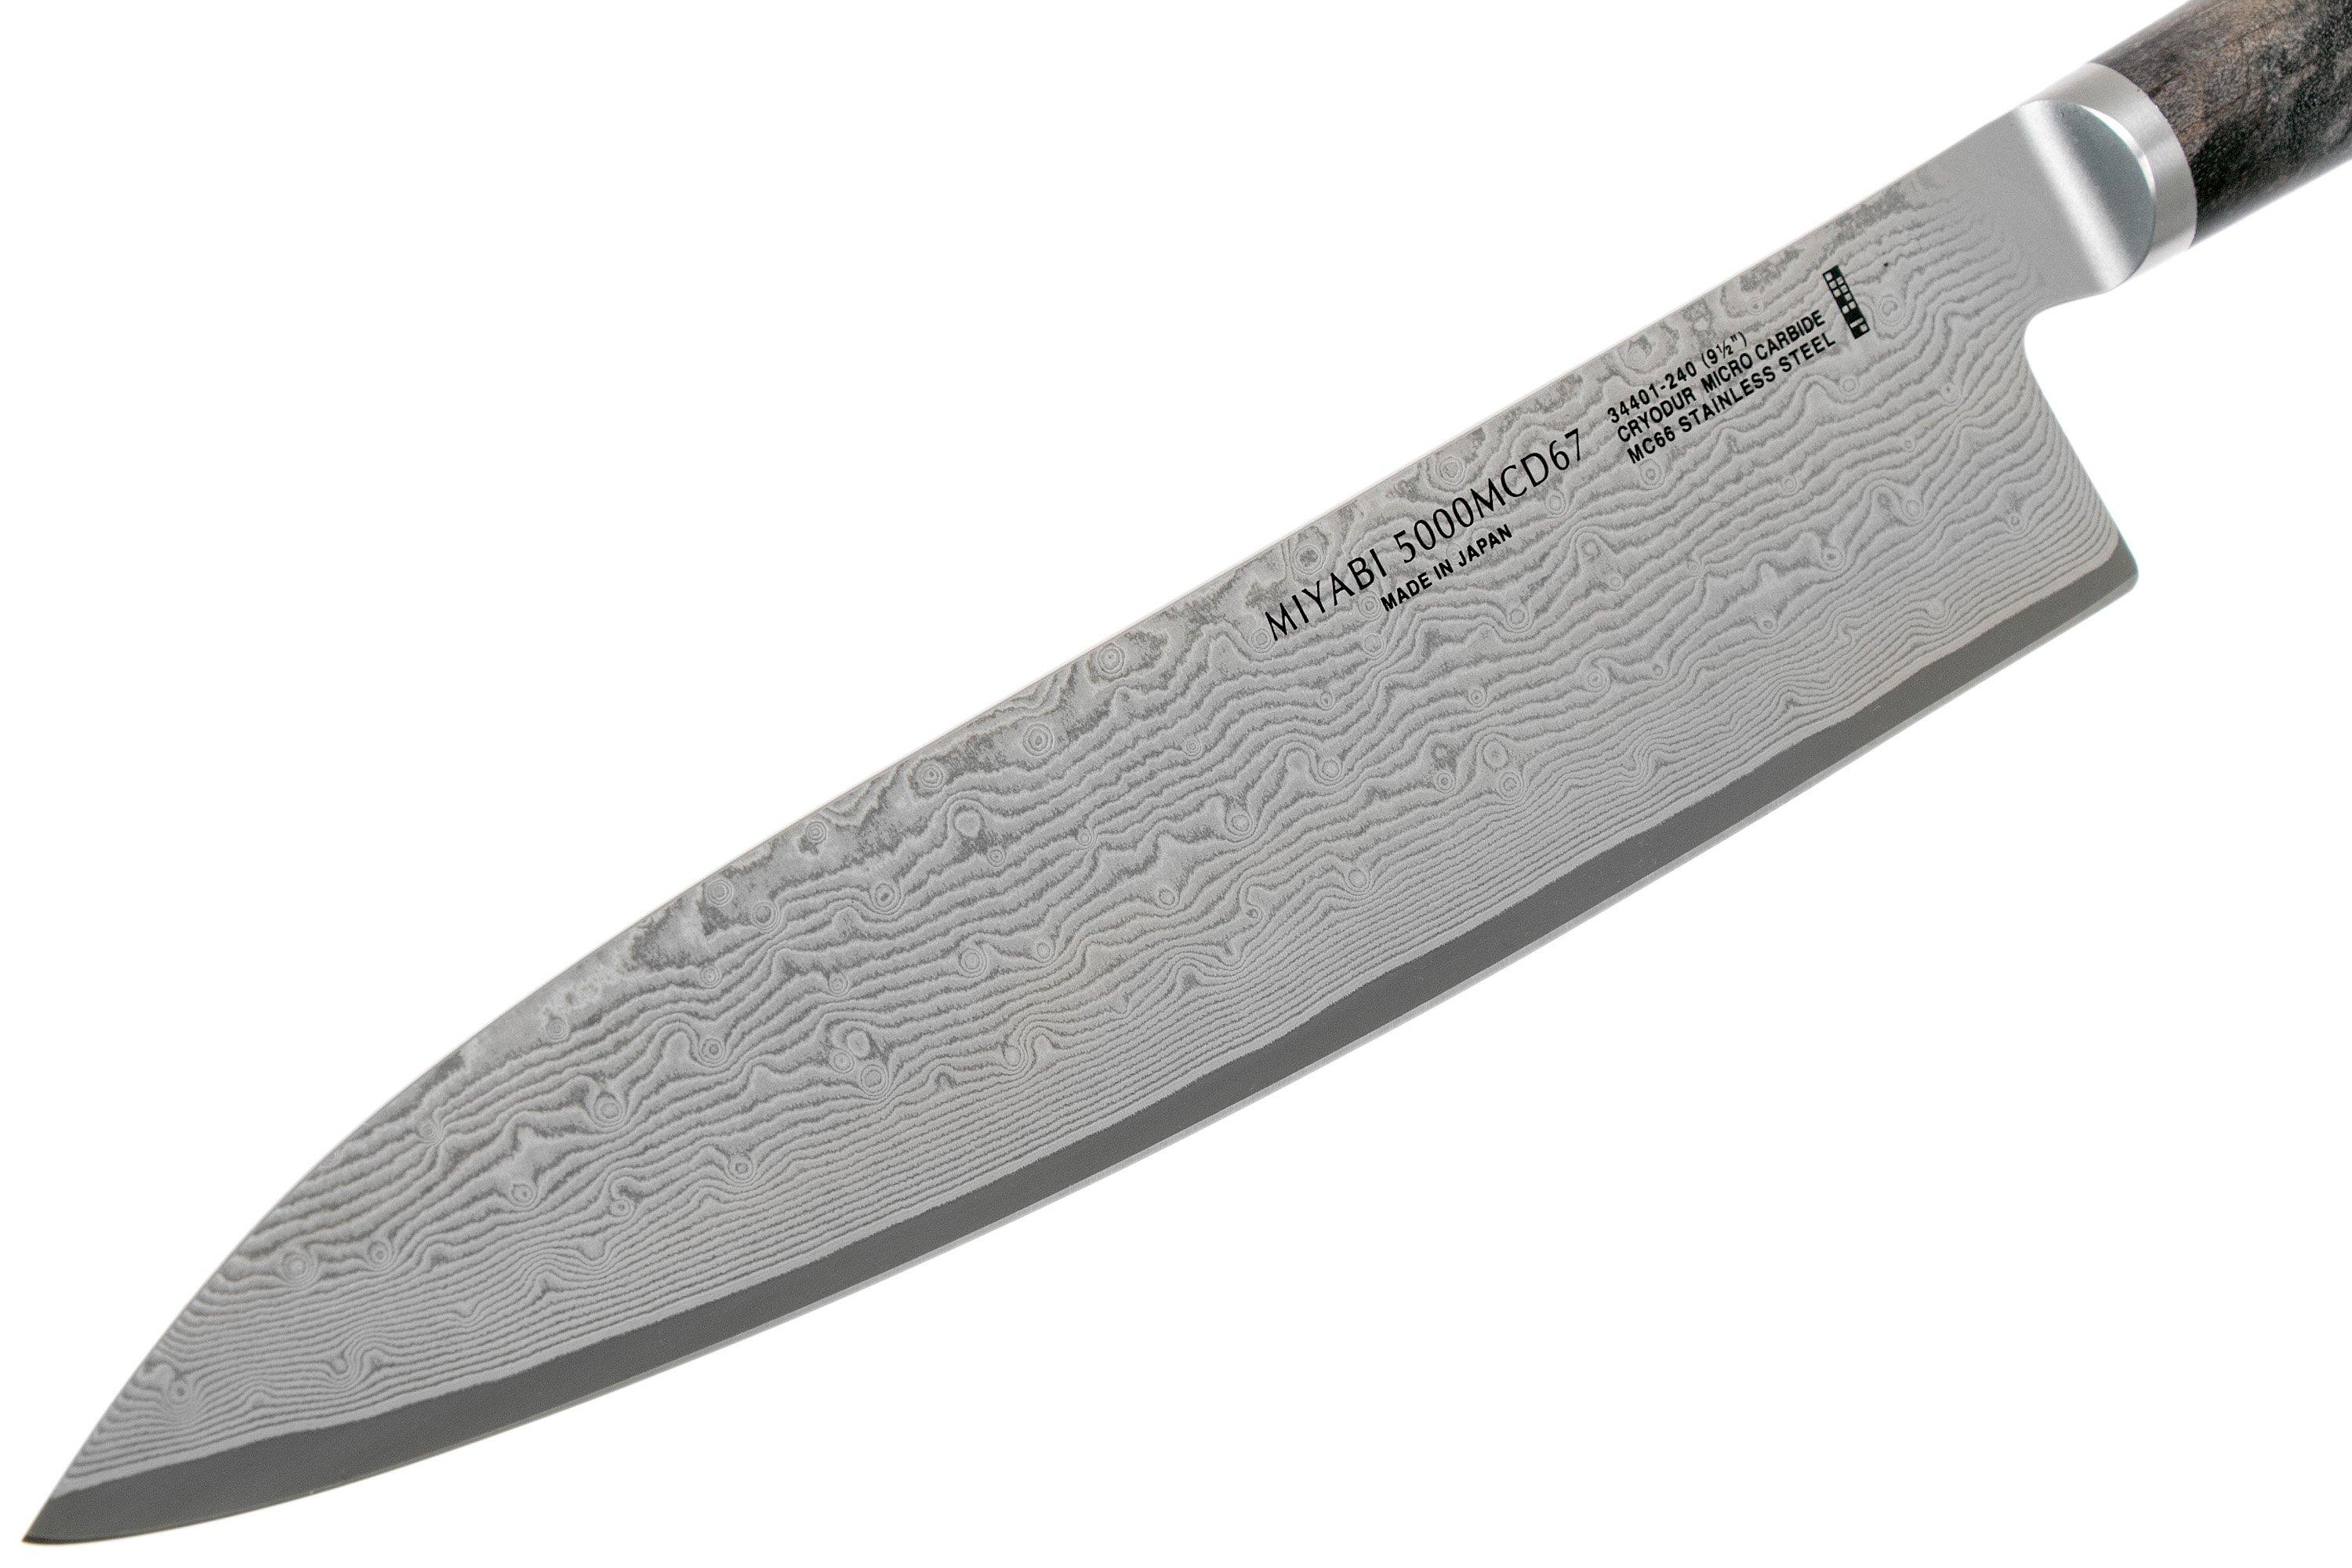 Miyabi by Zwilling 5000MCD 67 chef's knife 24 cm, 34401-241